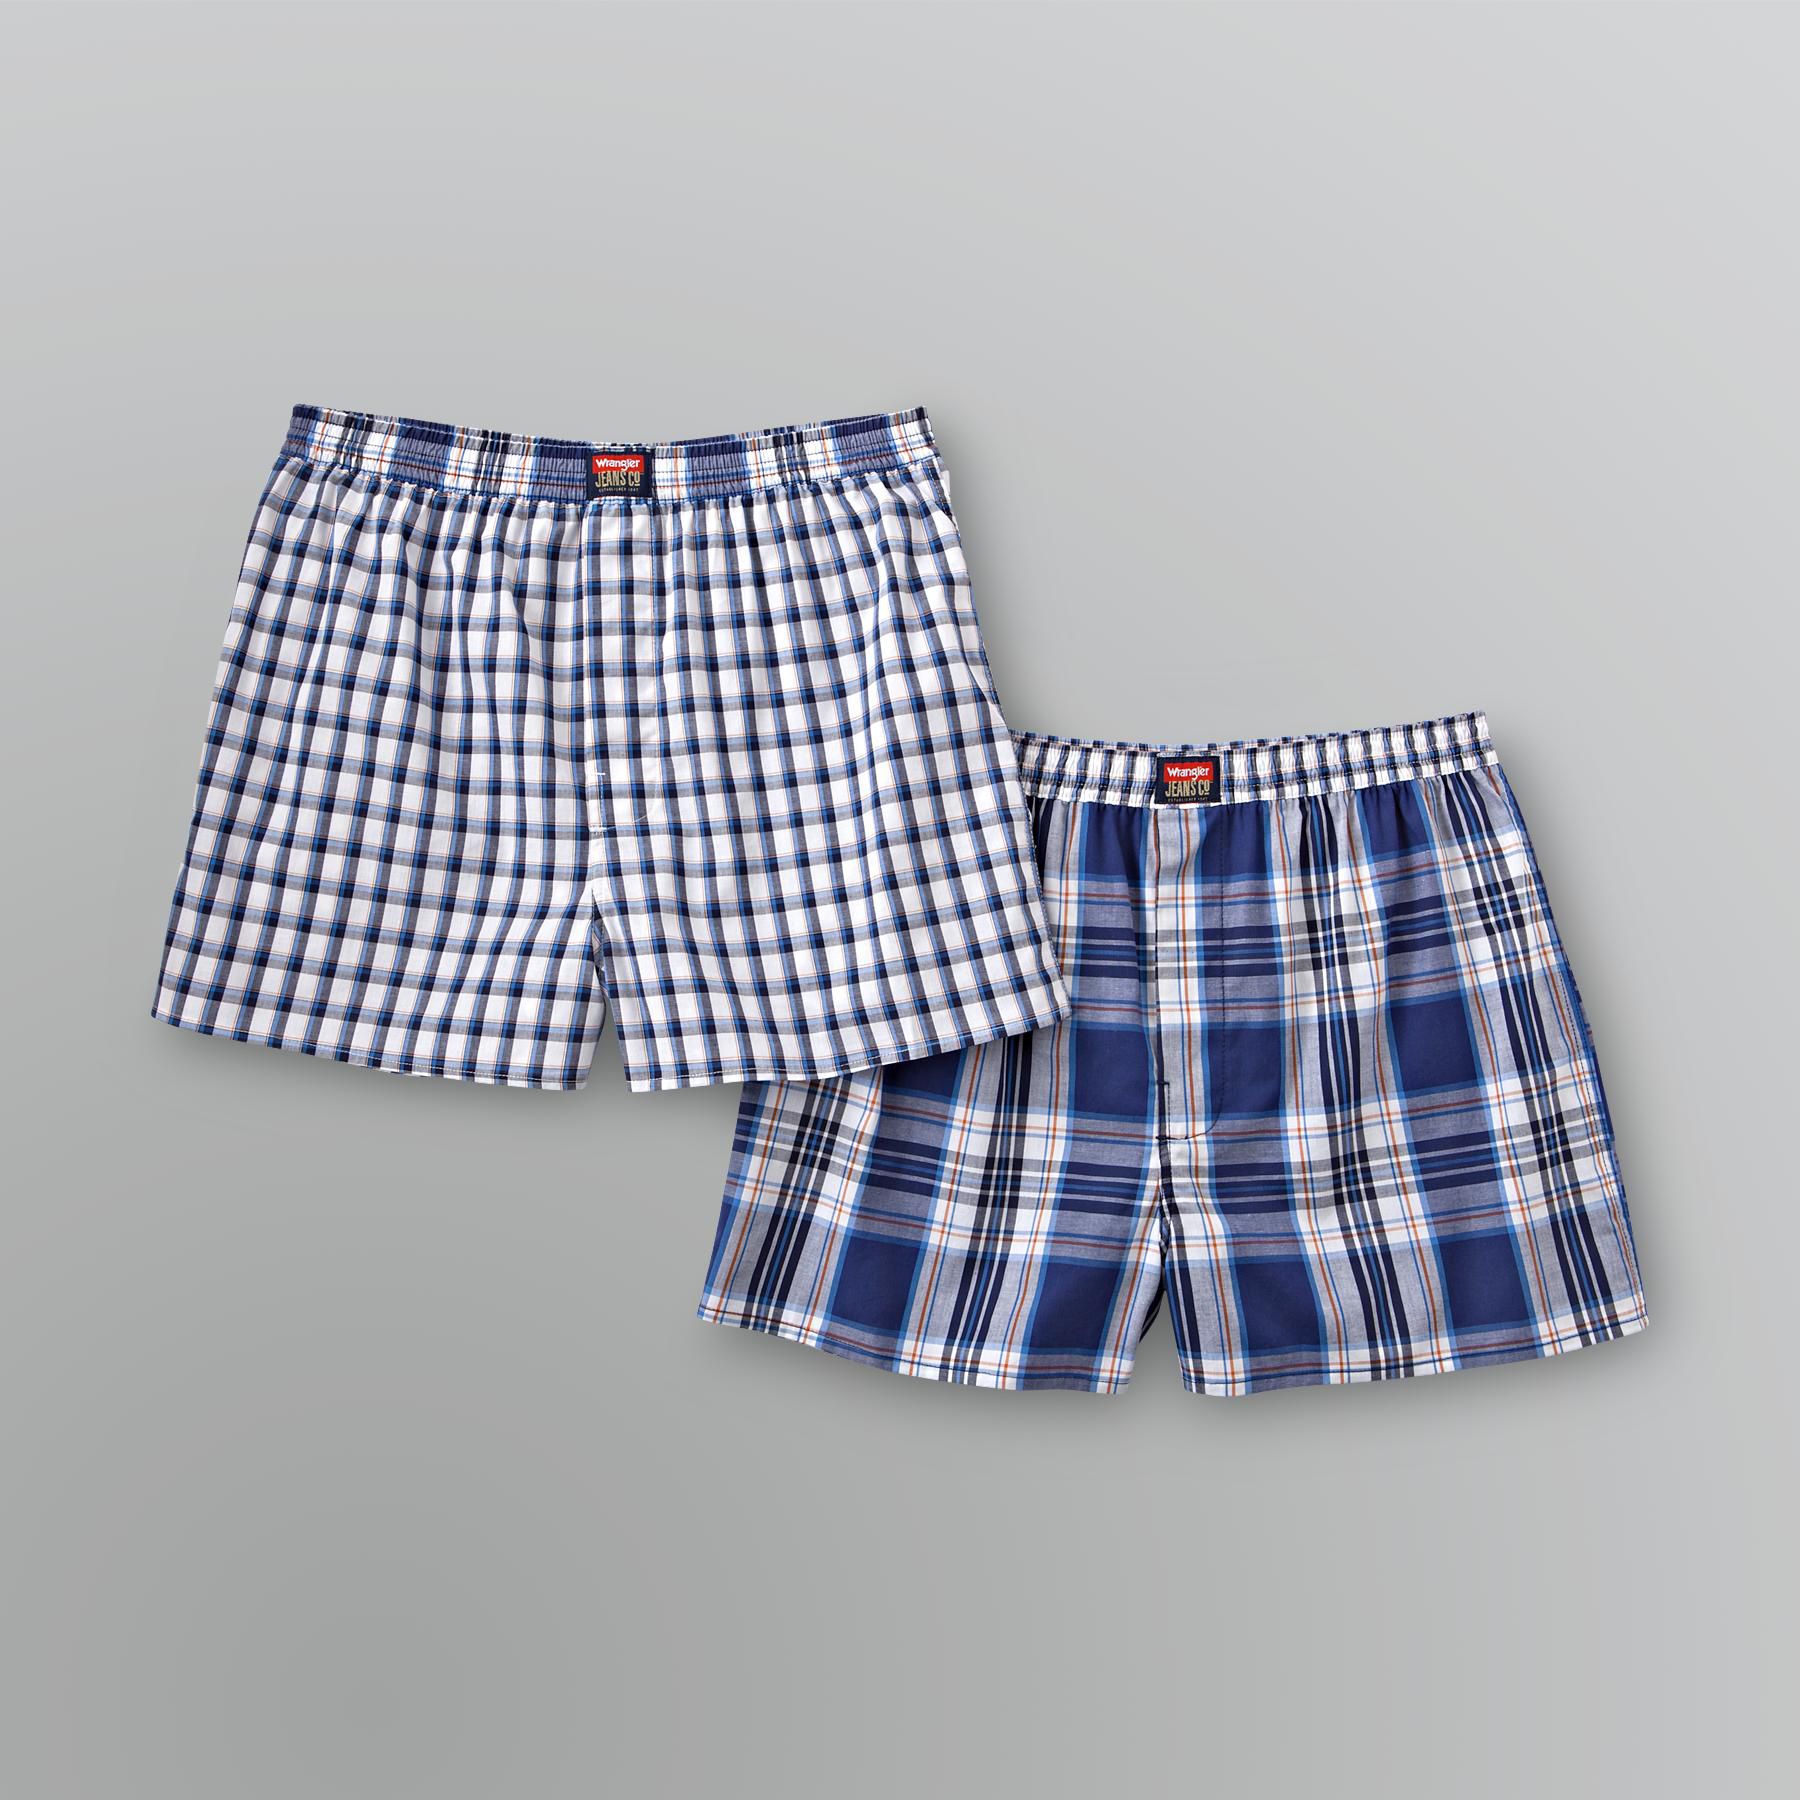 Wrangler Men's Comfort Fit Boxer Shorts - Two Pairs